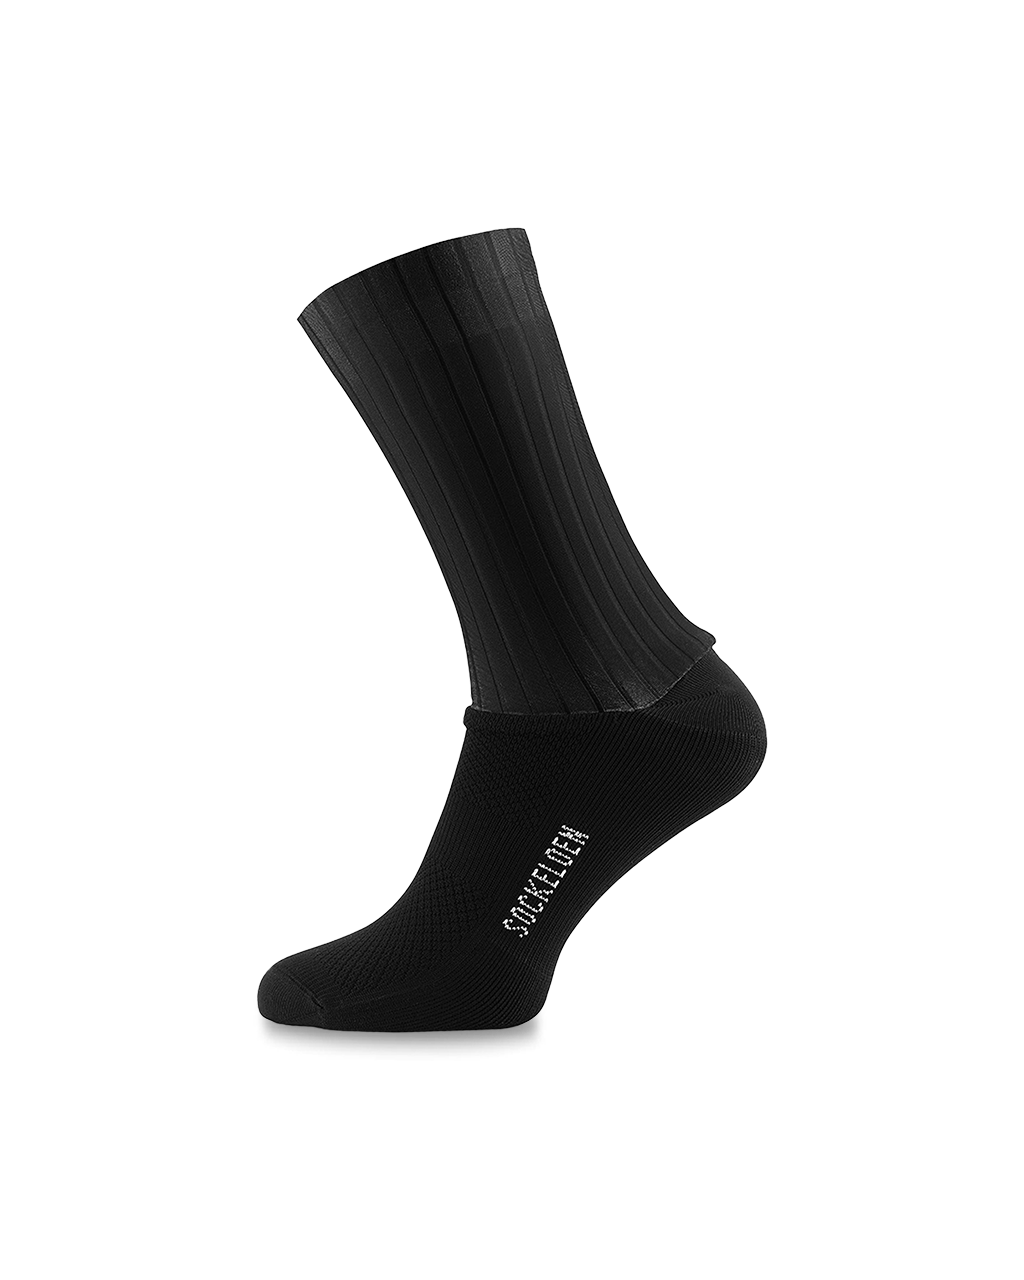 Allblack-aero-cycling-socks-sockeloen